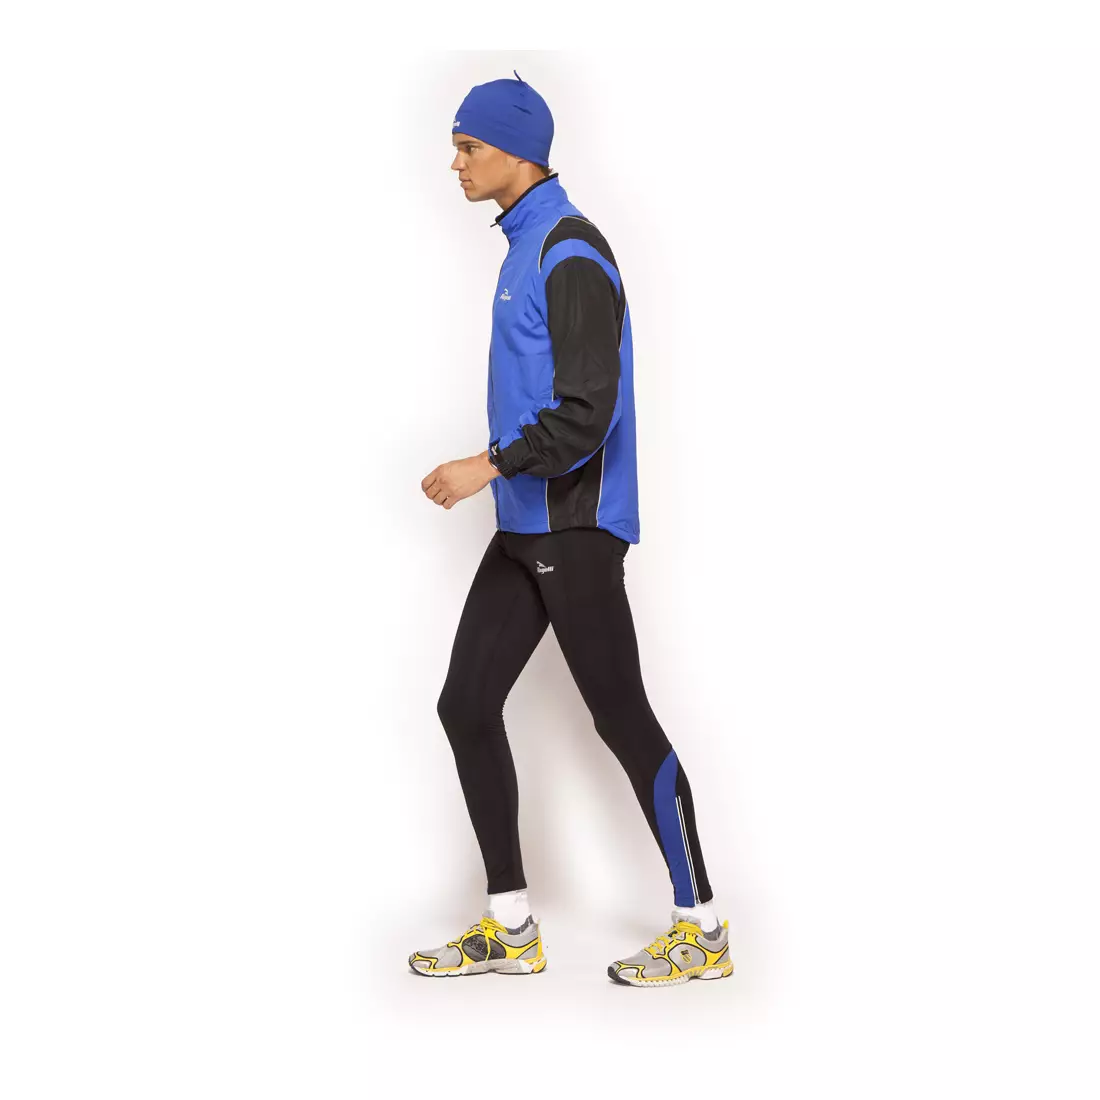 ROGELLI RUN MAGNI – Laufwindjacke für Herren – Farbe: Blau